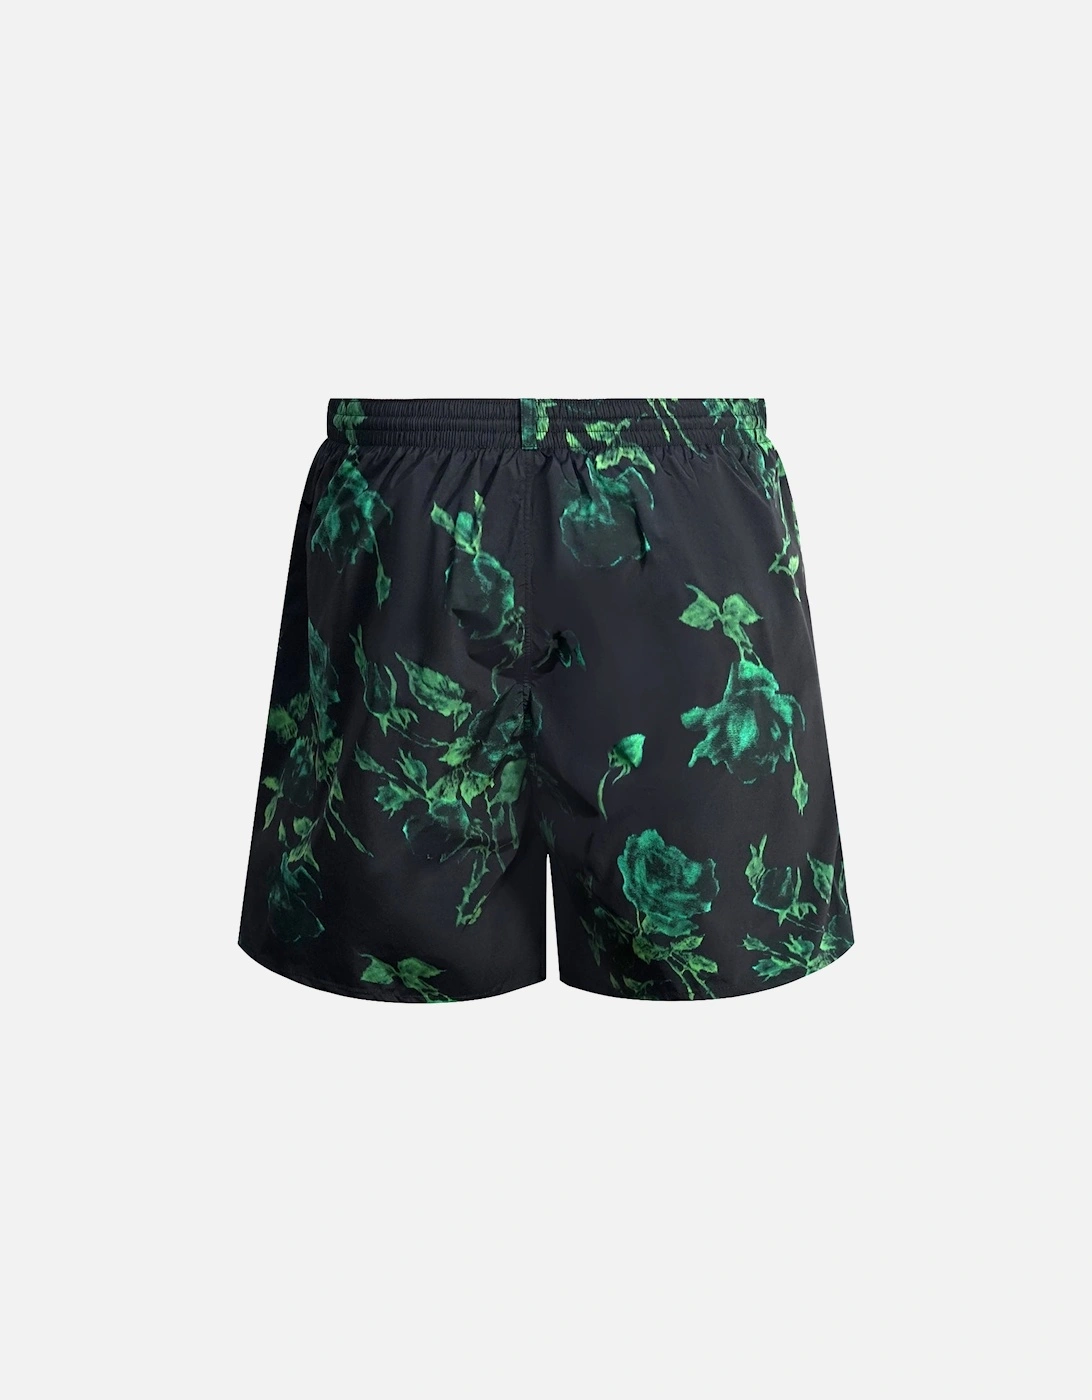 Green Floral All-Over Design Black Swim Shorts